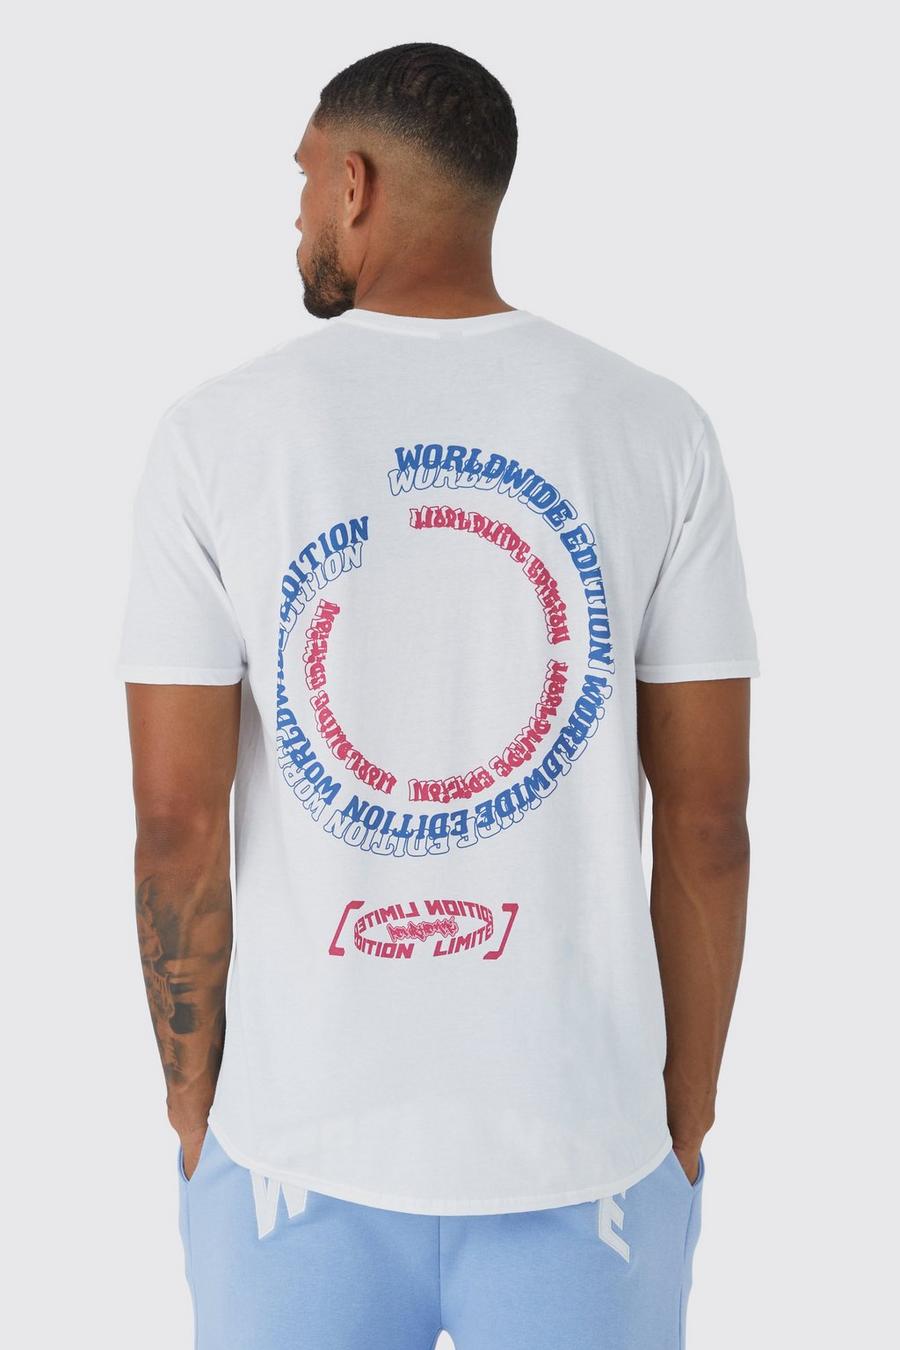 Camiseta Tall oversize con estampado Worldwide en la espalda, White blanco